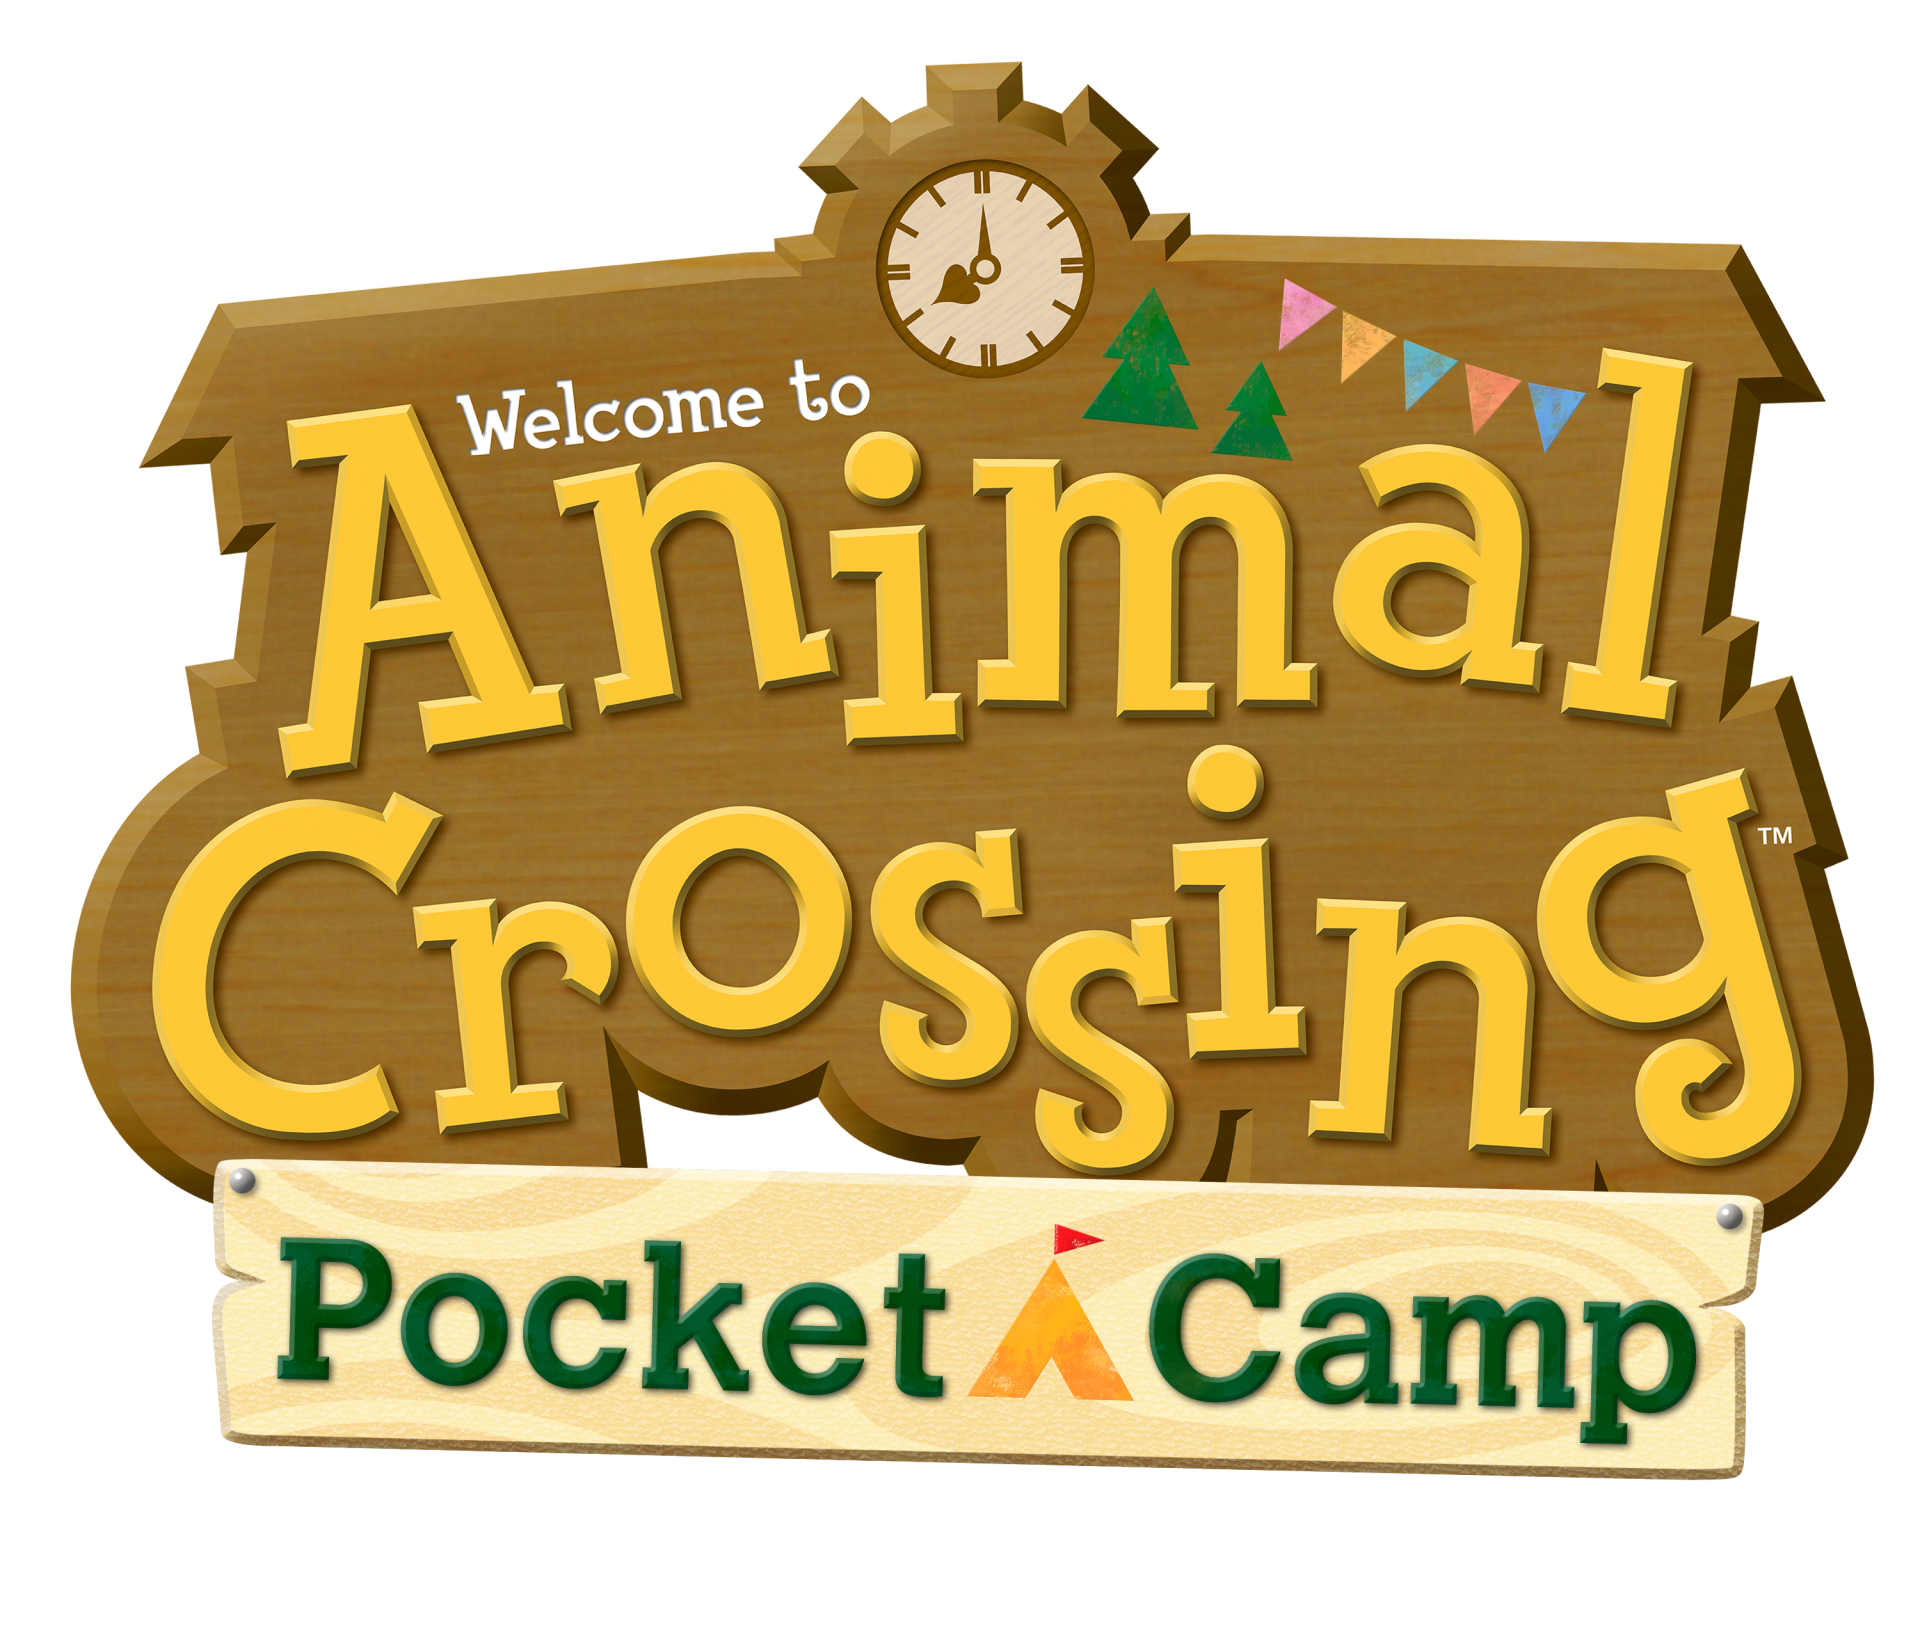 Crossing pocket camp